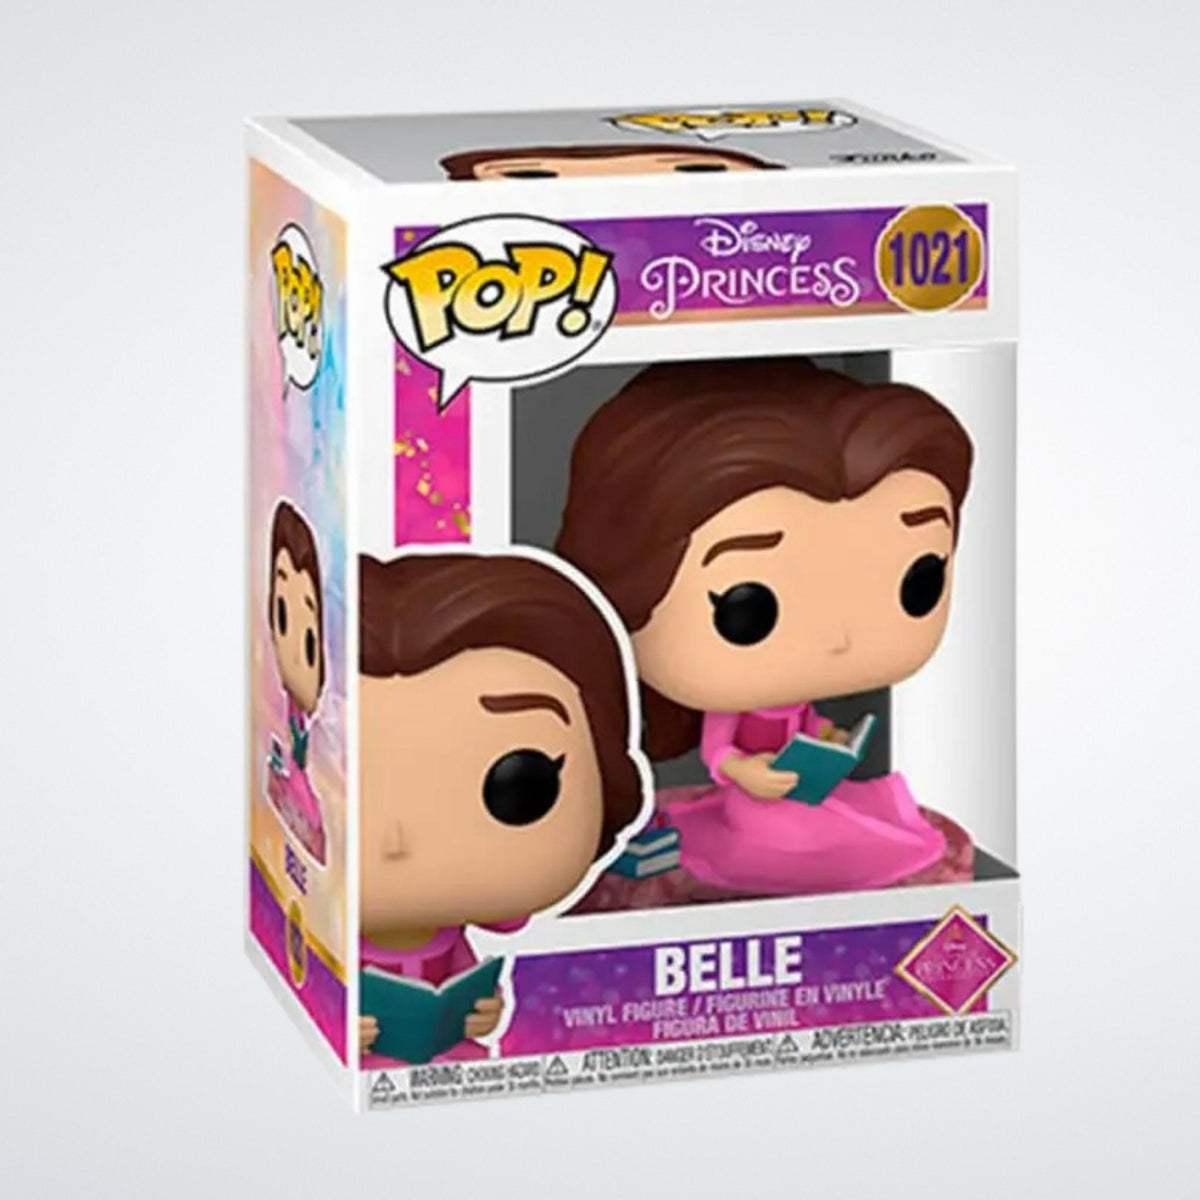 Pop! Disney: Ultimate Princess - Belle